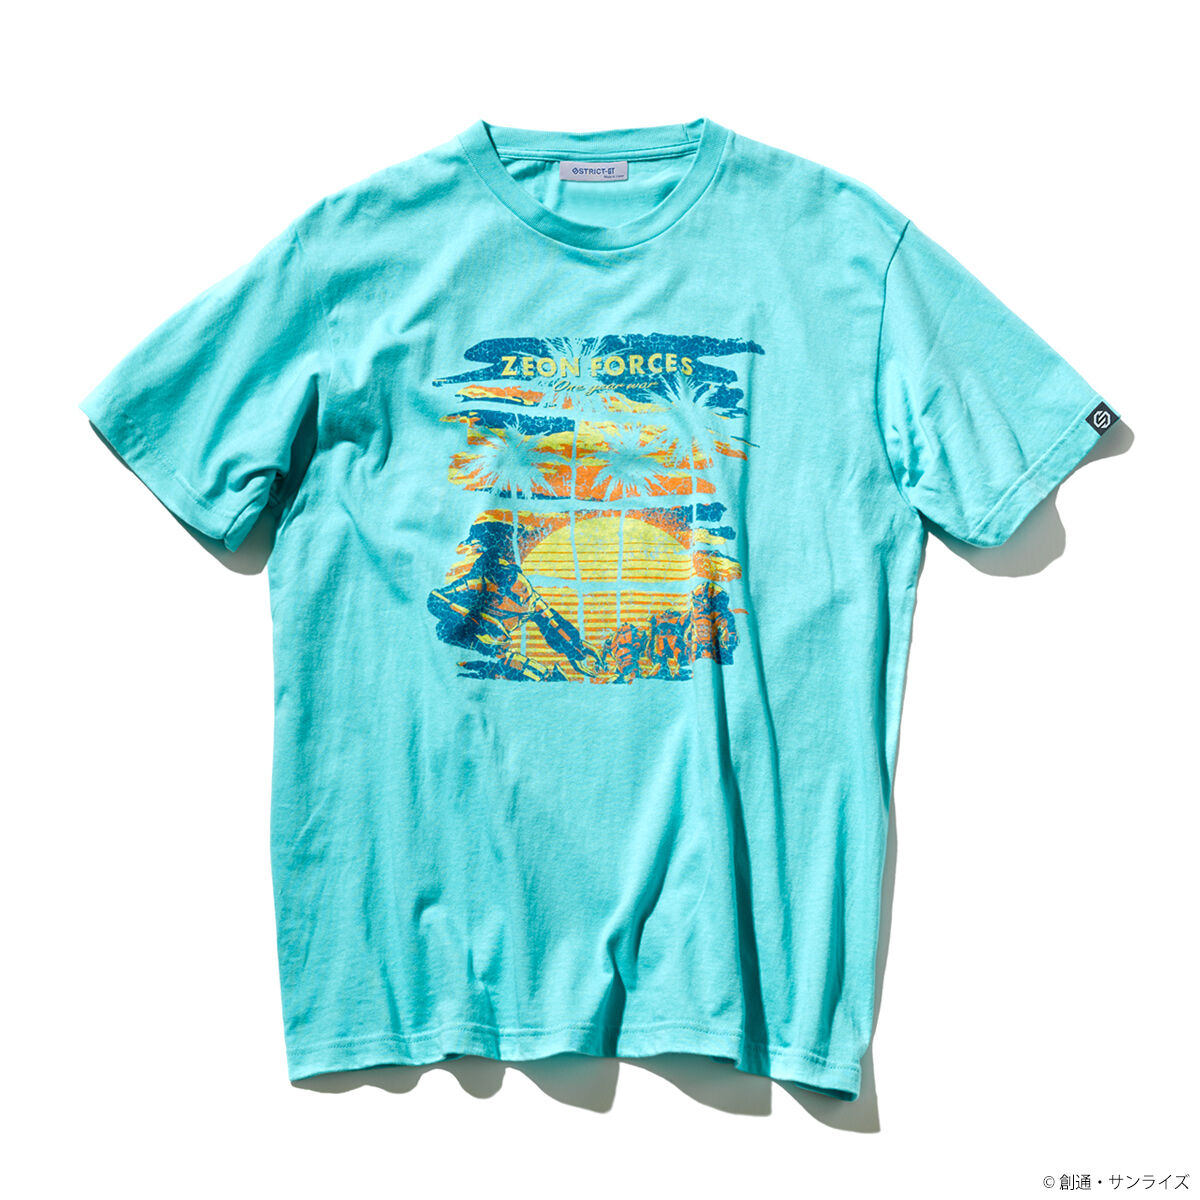 STRICT-G『機動戦士ガンダム』 サーフコレクションTシャツ サンセット ...